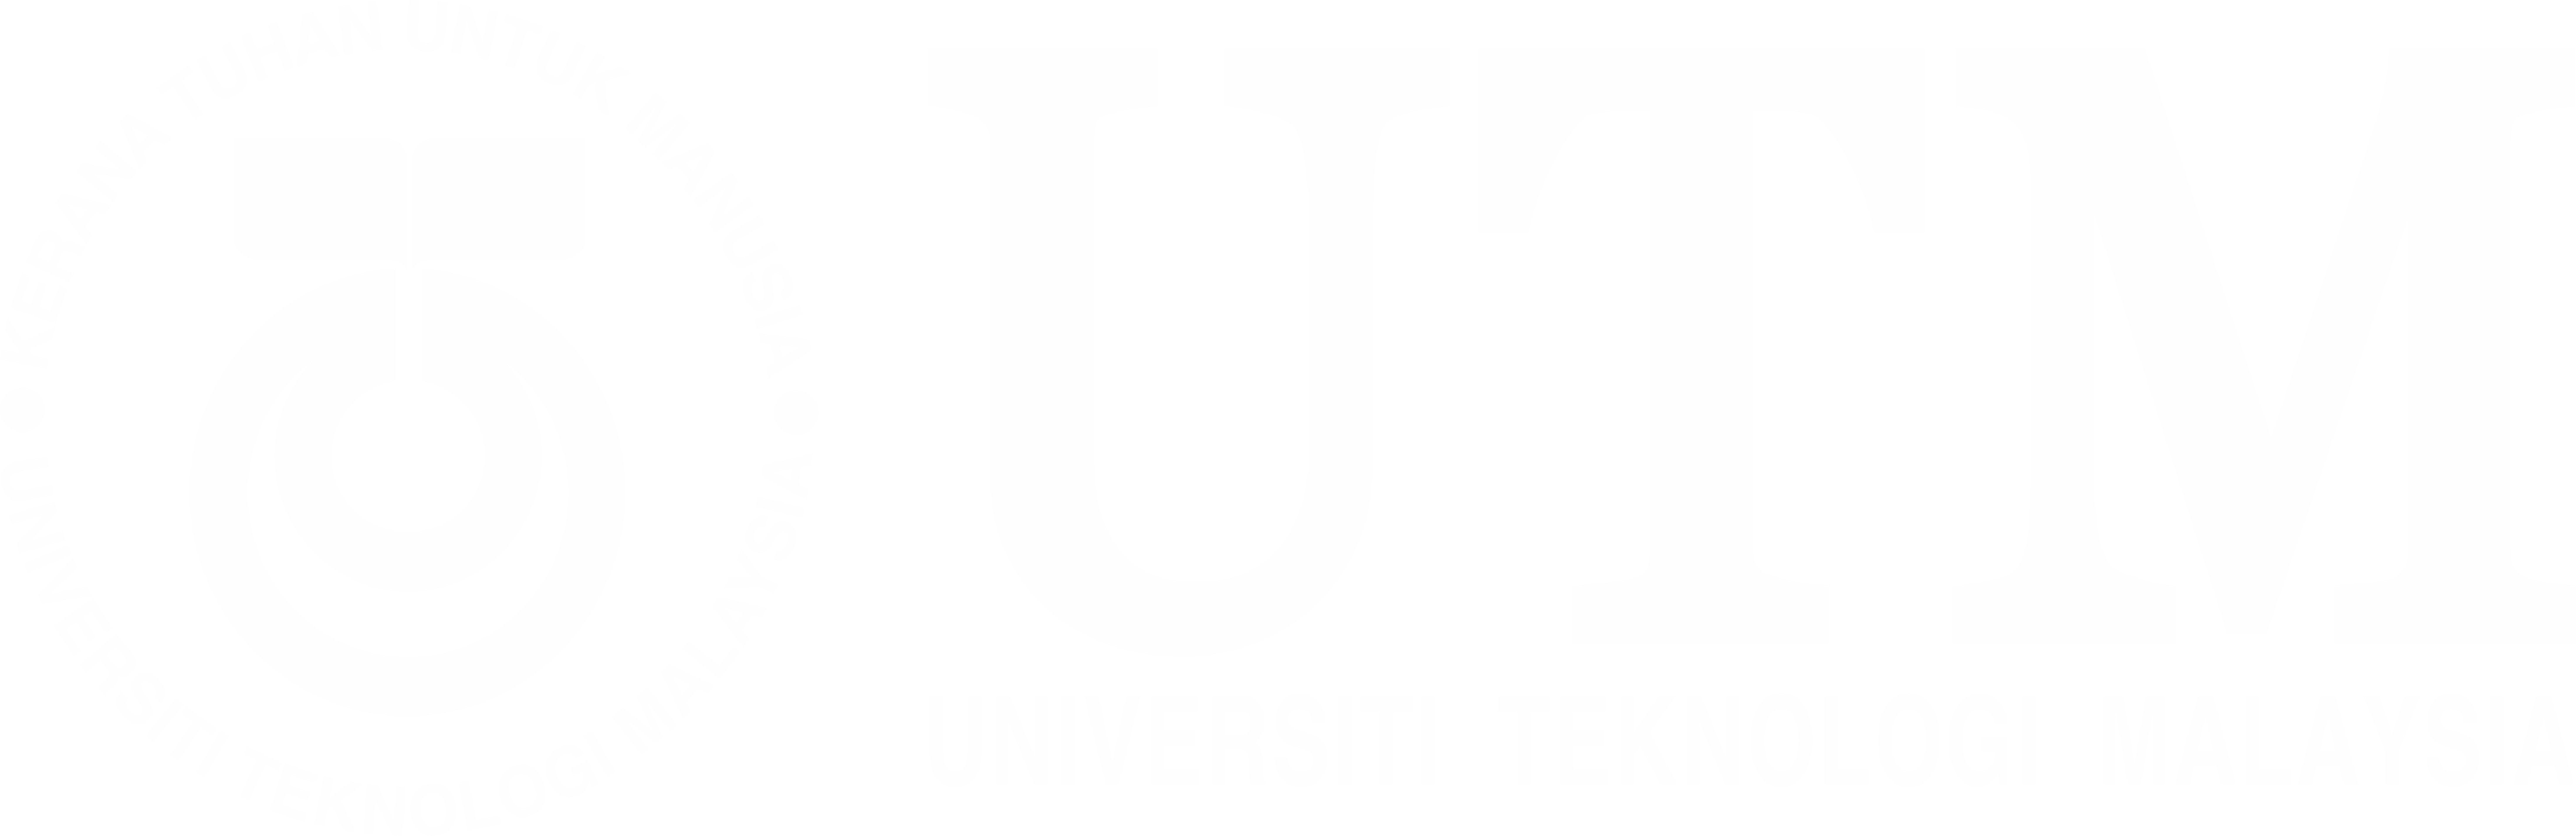 UTM Logo - UTM MOOC - Universiti Teknologi Malaysia (UTM-MOOC)